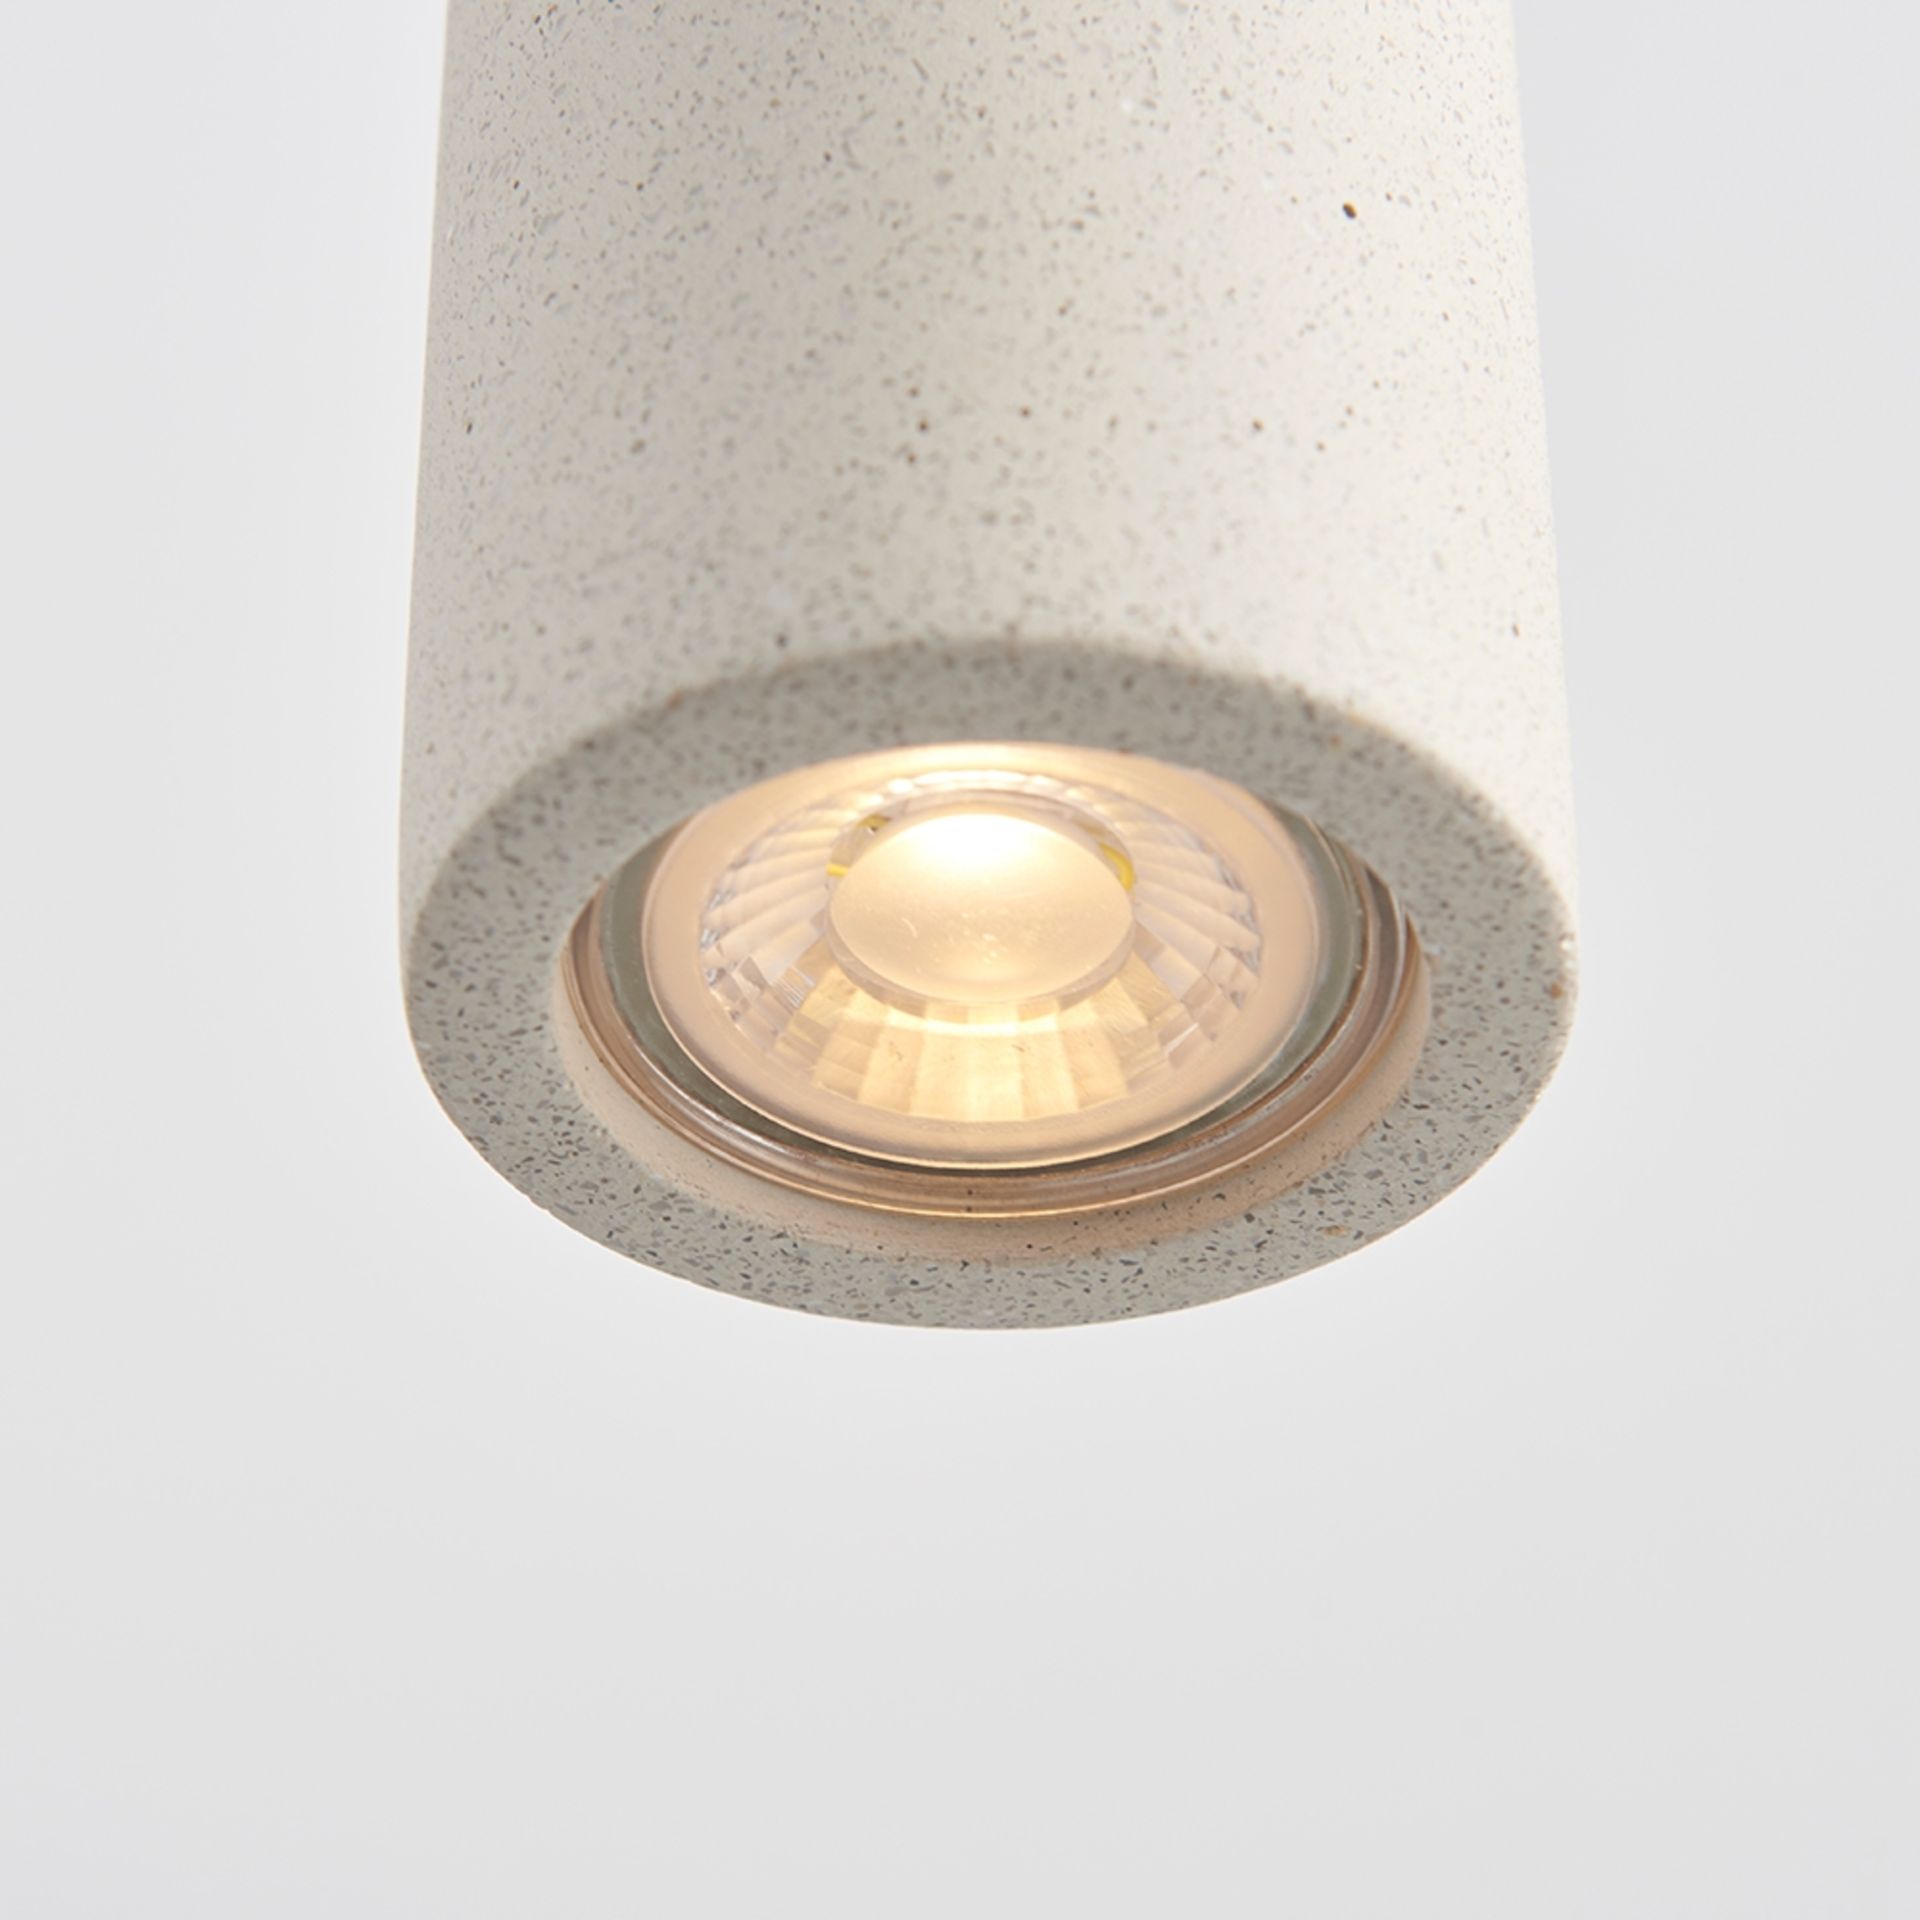 Endon Lighting Architectural inspired white sandstone concrete finish pendant, suspended from - Bild 5 aus 5